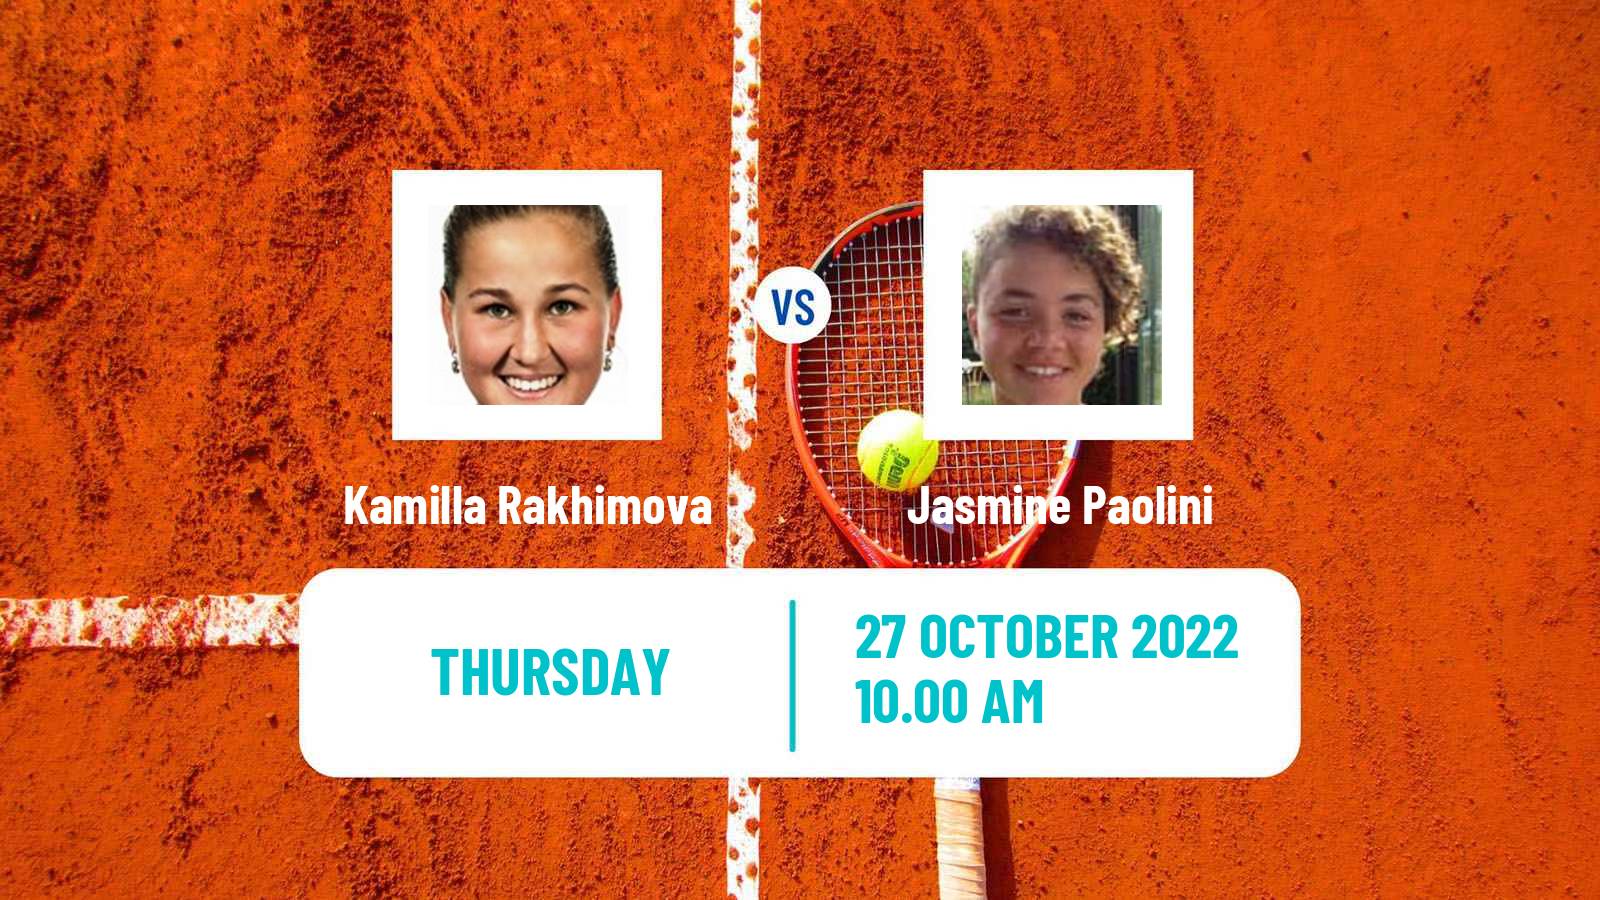 Tennis ITF Tournaments Kamilla Rakhimova - Jasmine Paolini